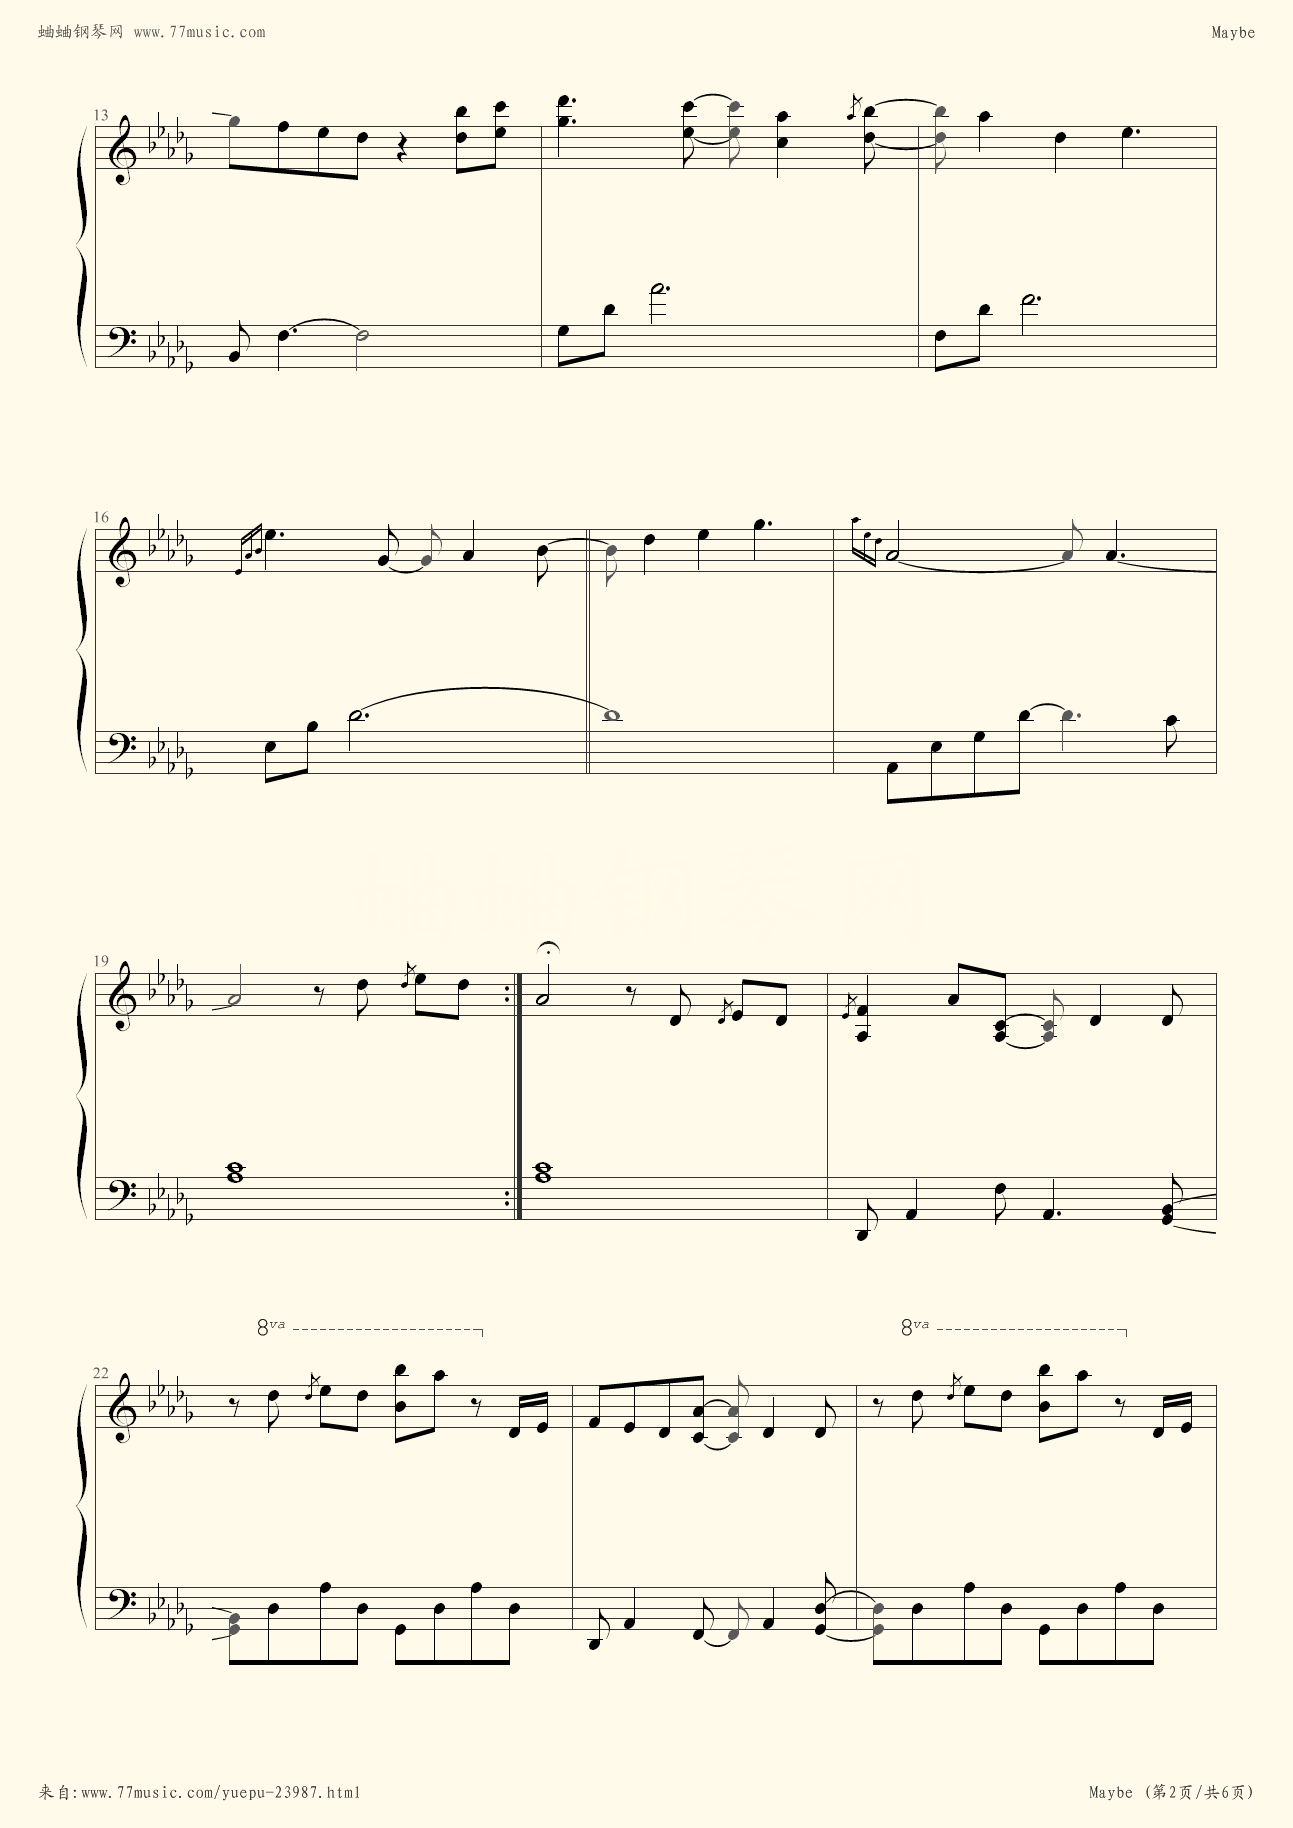 Maybe - Yiruma - Flash Free Piano Sheet Music | Learn How ...